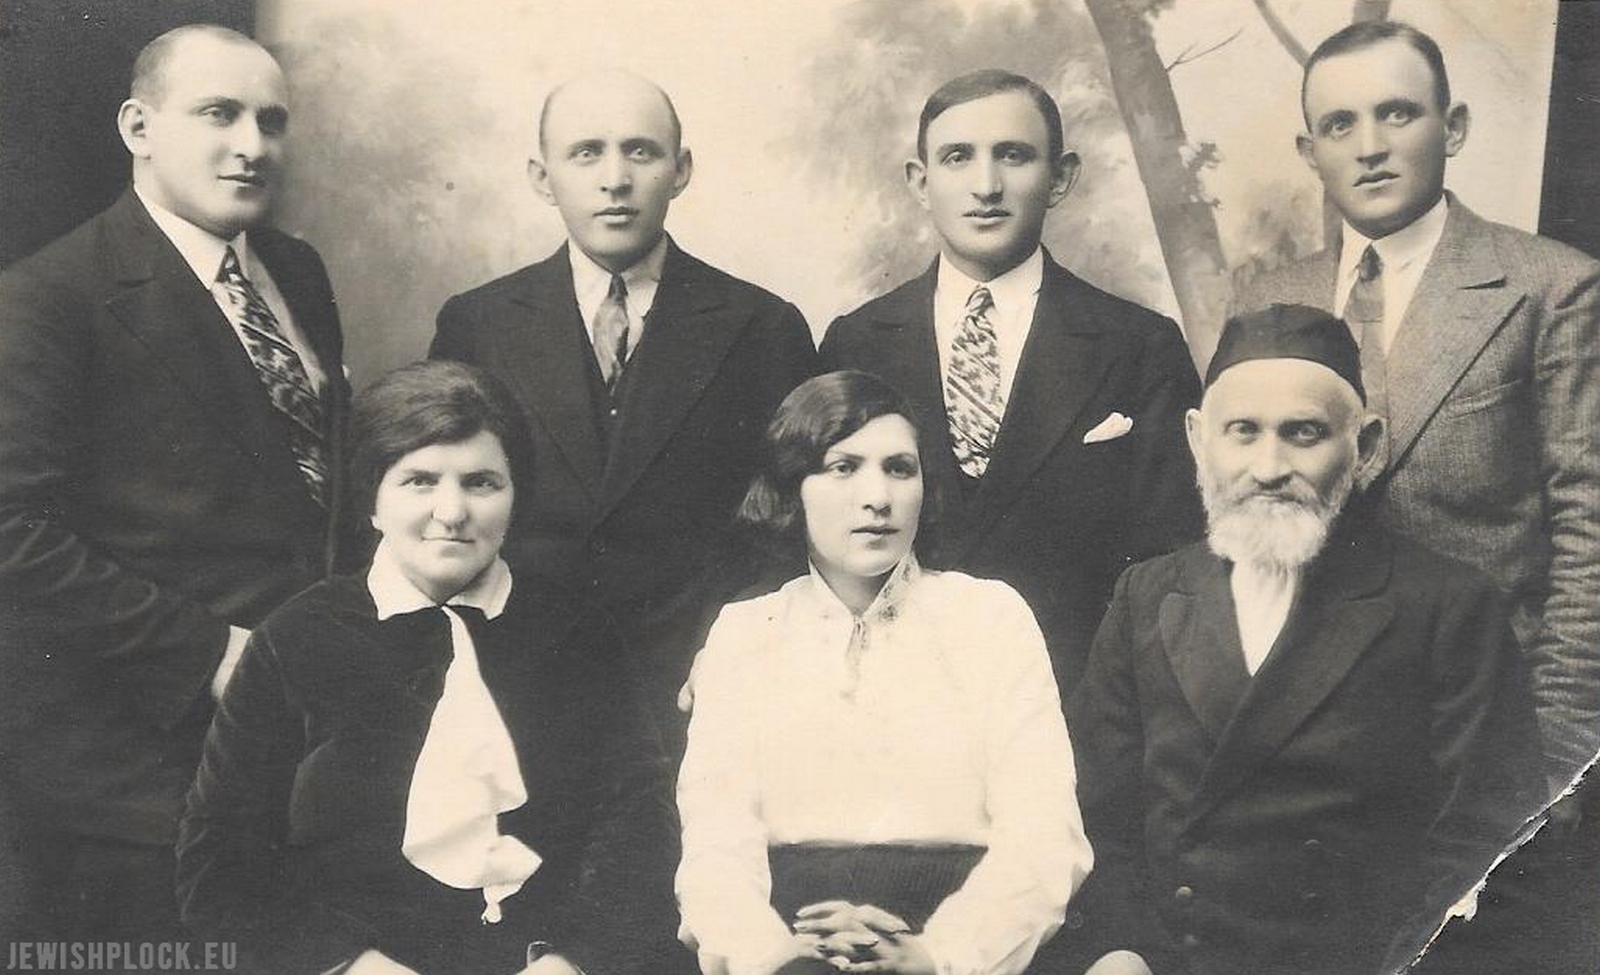 The Zylber – Nisson family